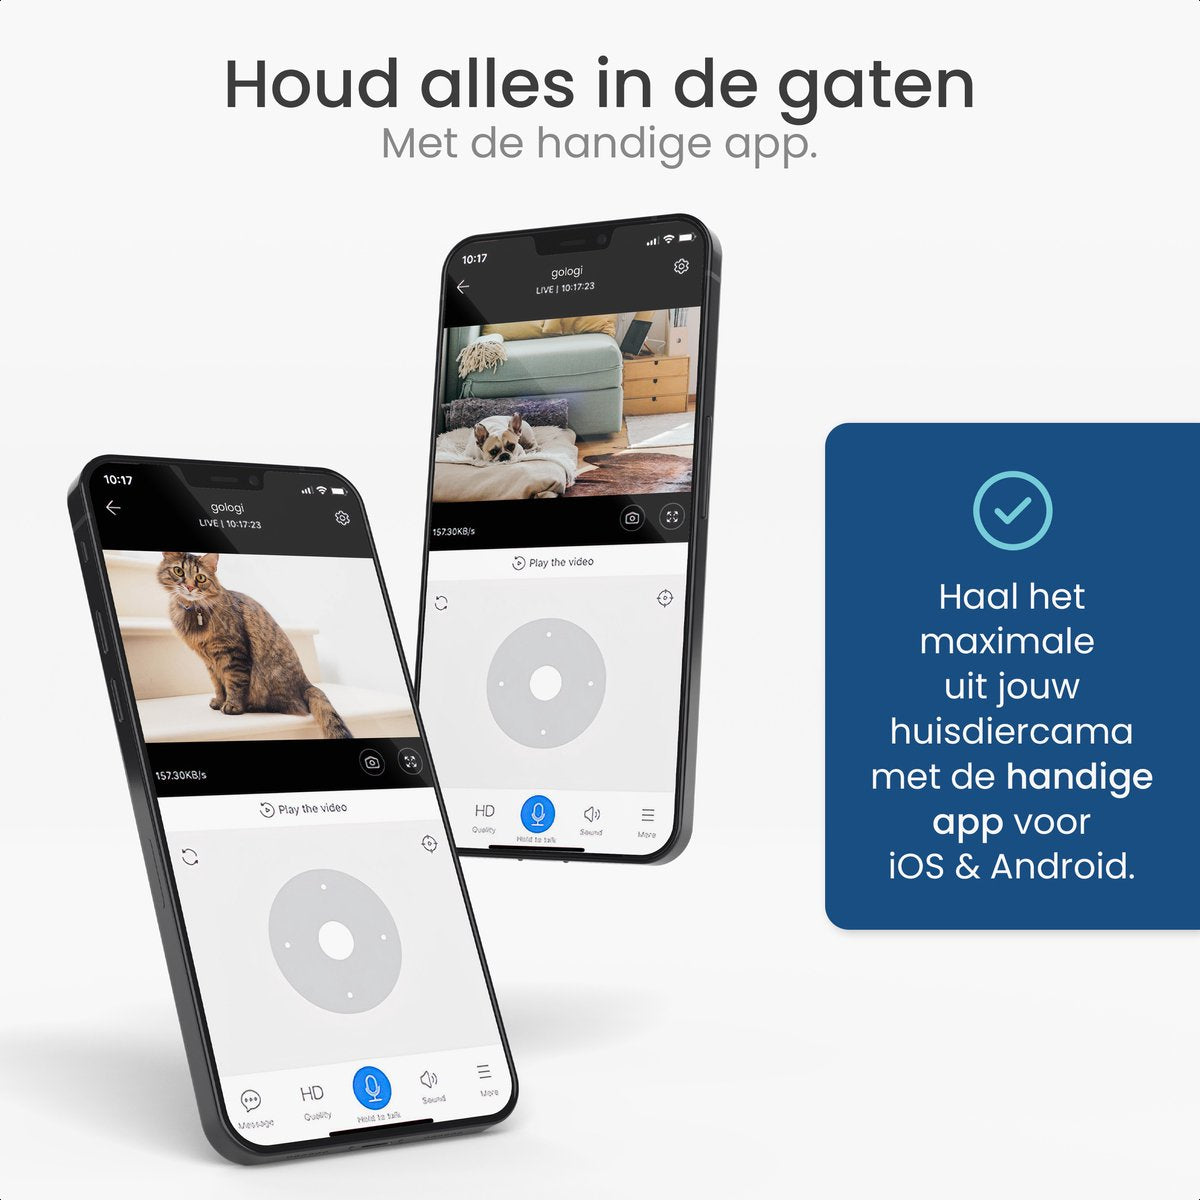 Gologi Huisdiercamera met App - Hondencamera - Pet camera - Beveiligingscamera - Security camera - Voor alle huisdieren - Met wifi - Wit